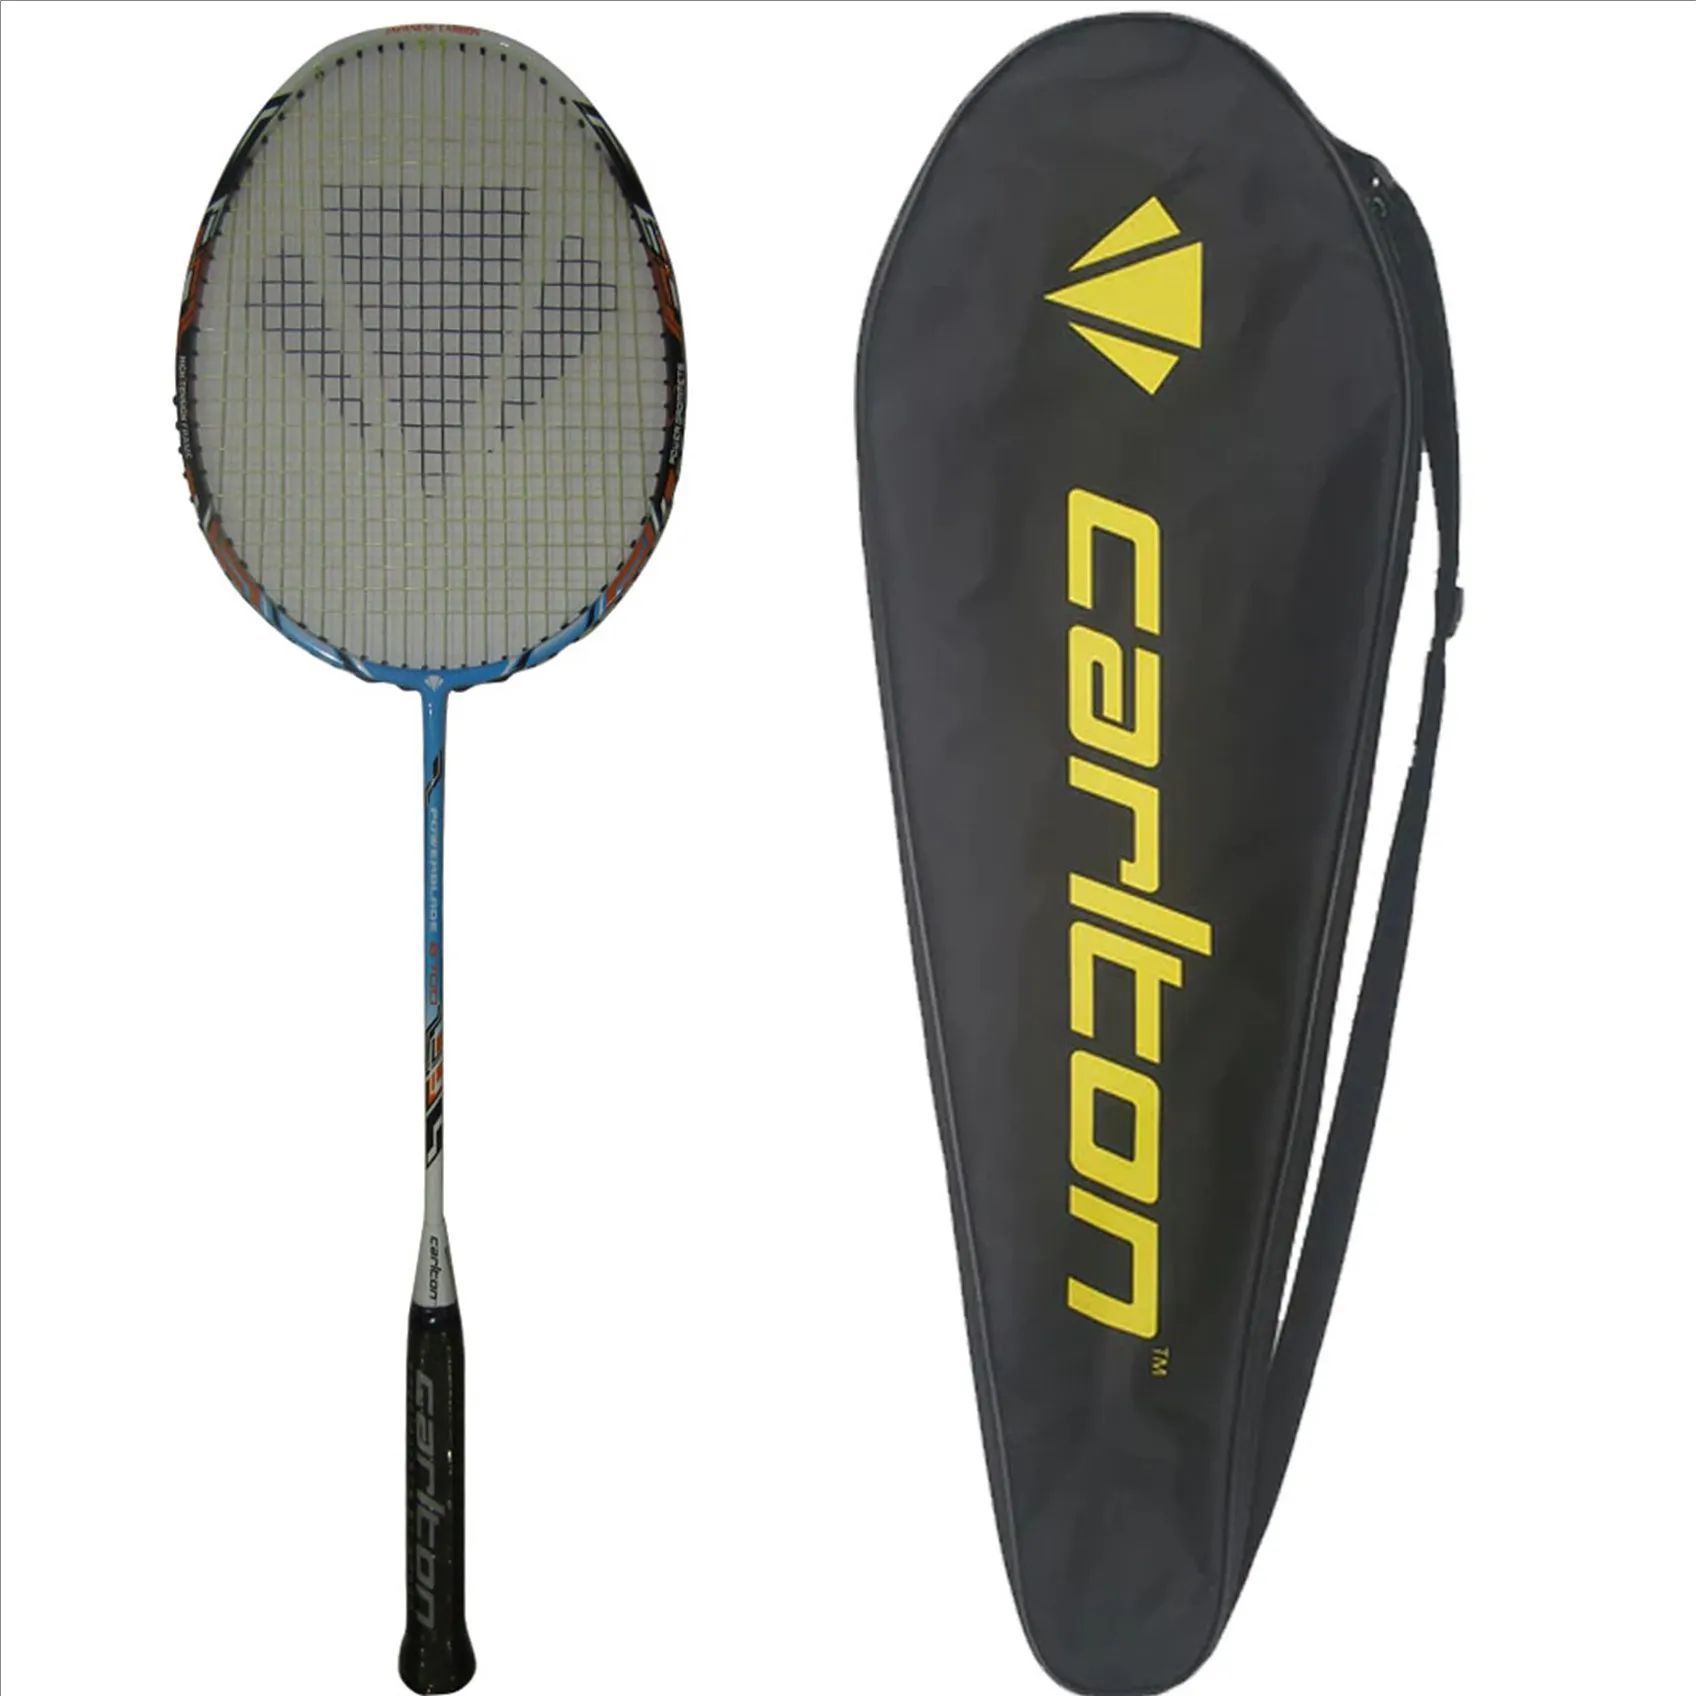 Carlton PowerBlade 8700 Badminton Racket,- Buy Carlton PowerBlade 8700 Badminton Racket Online at Lowest Prices in India